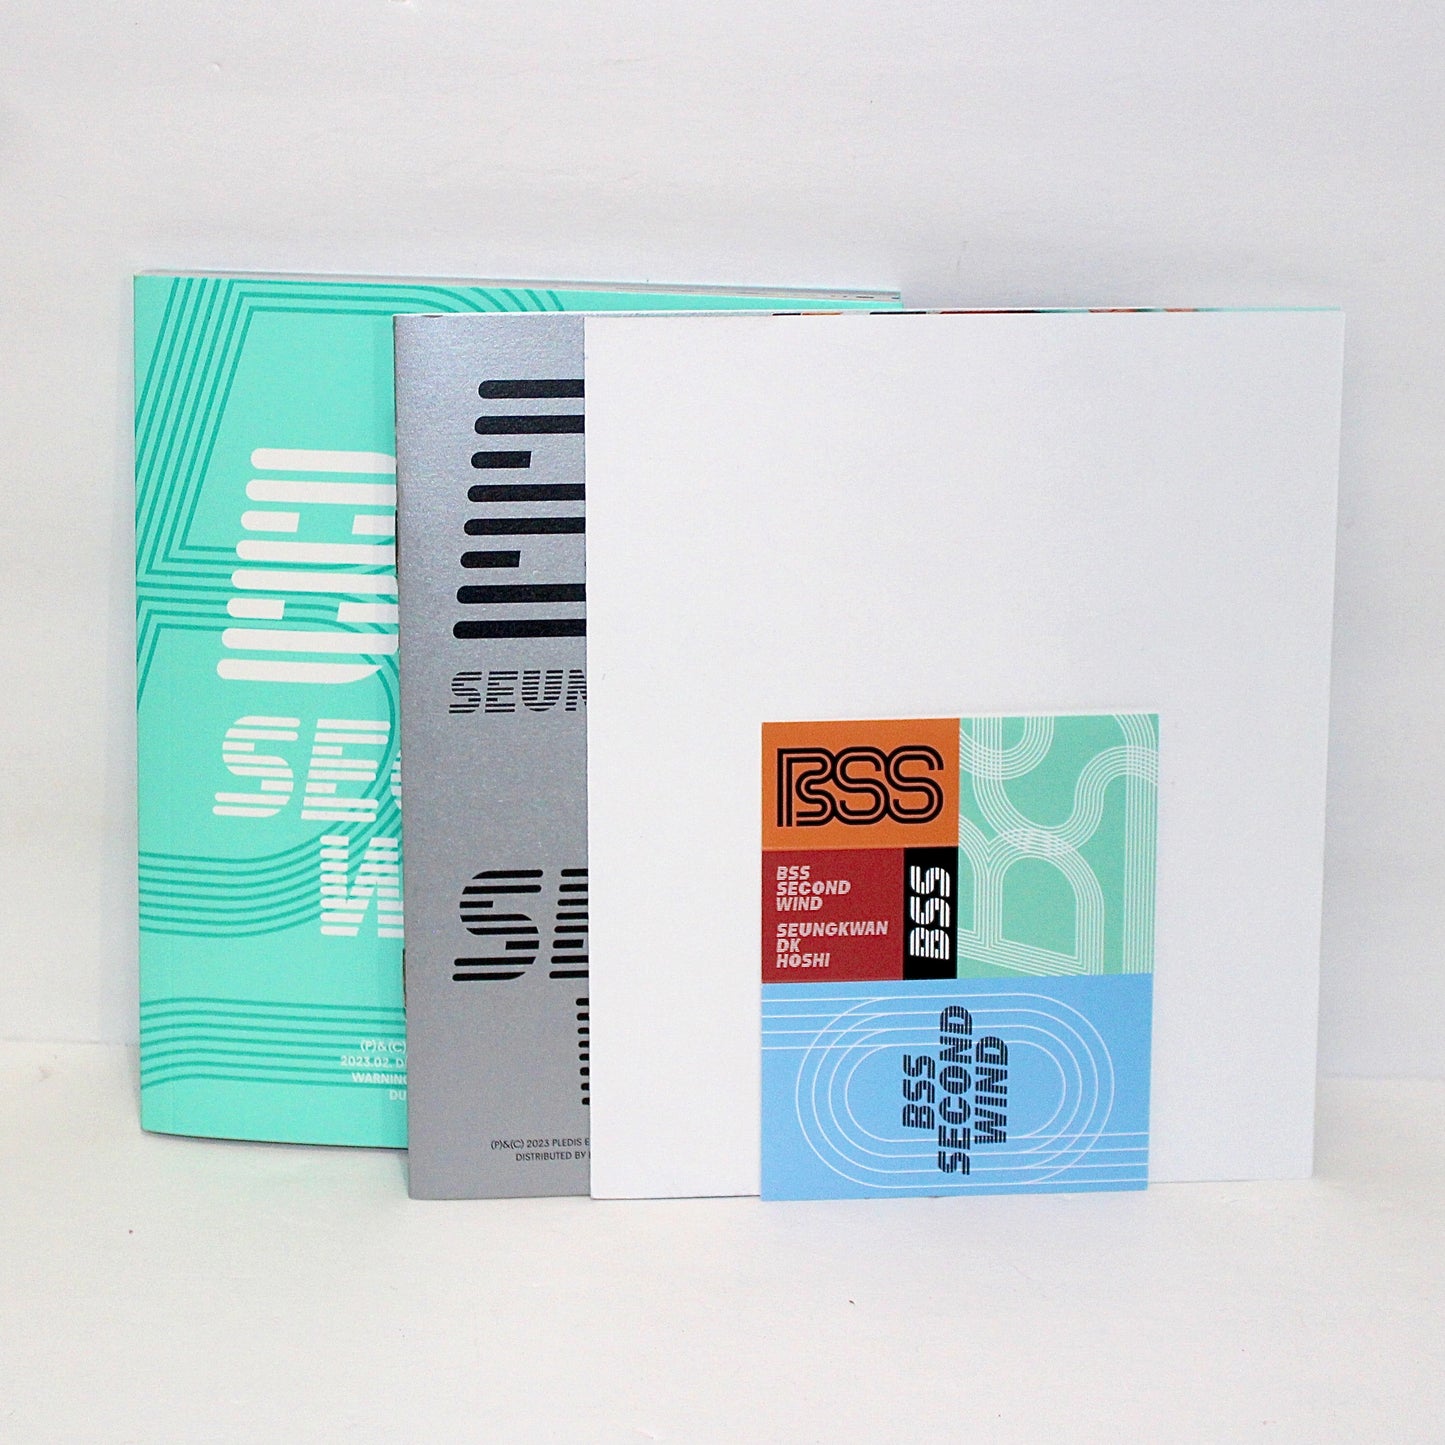 BSS 1st Single Album: Second Wind